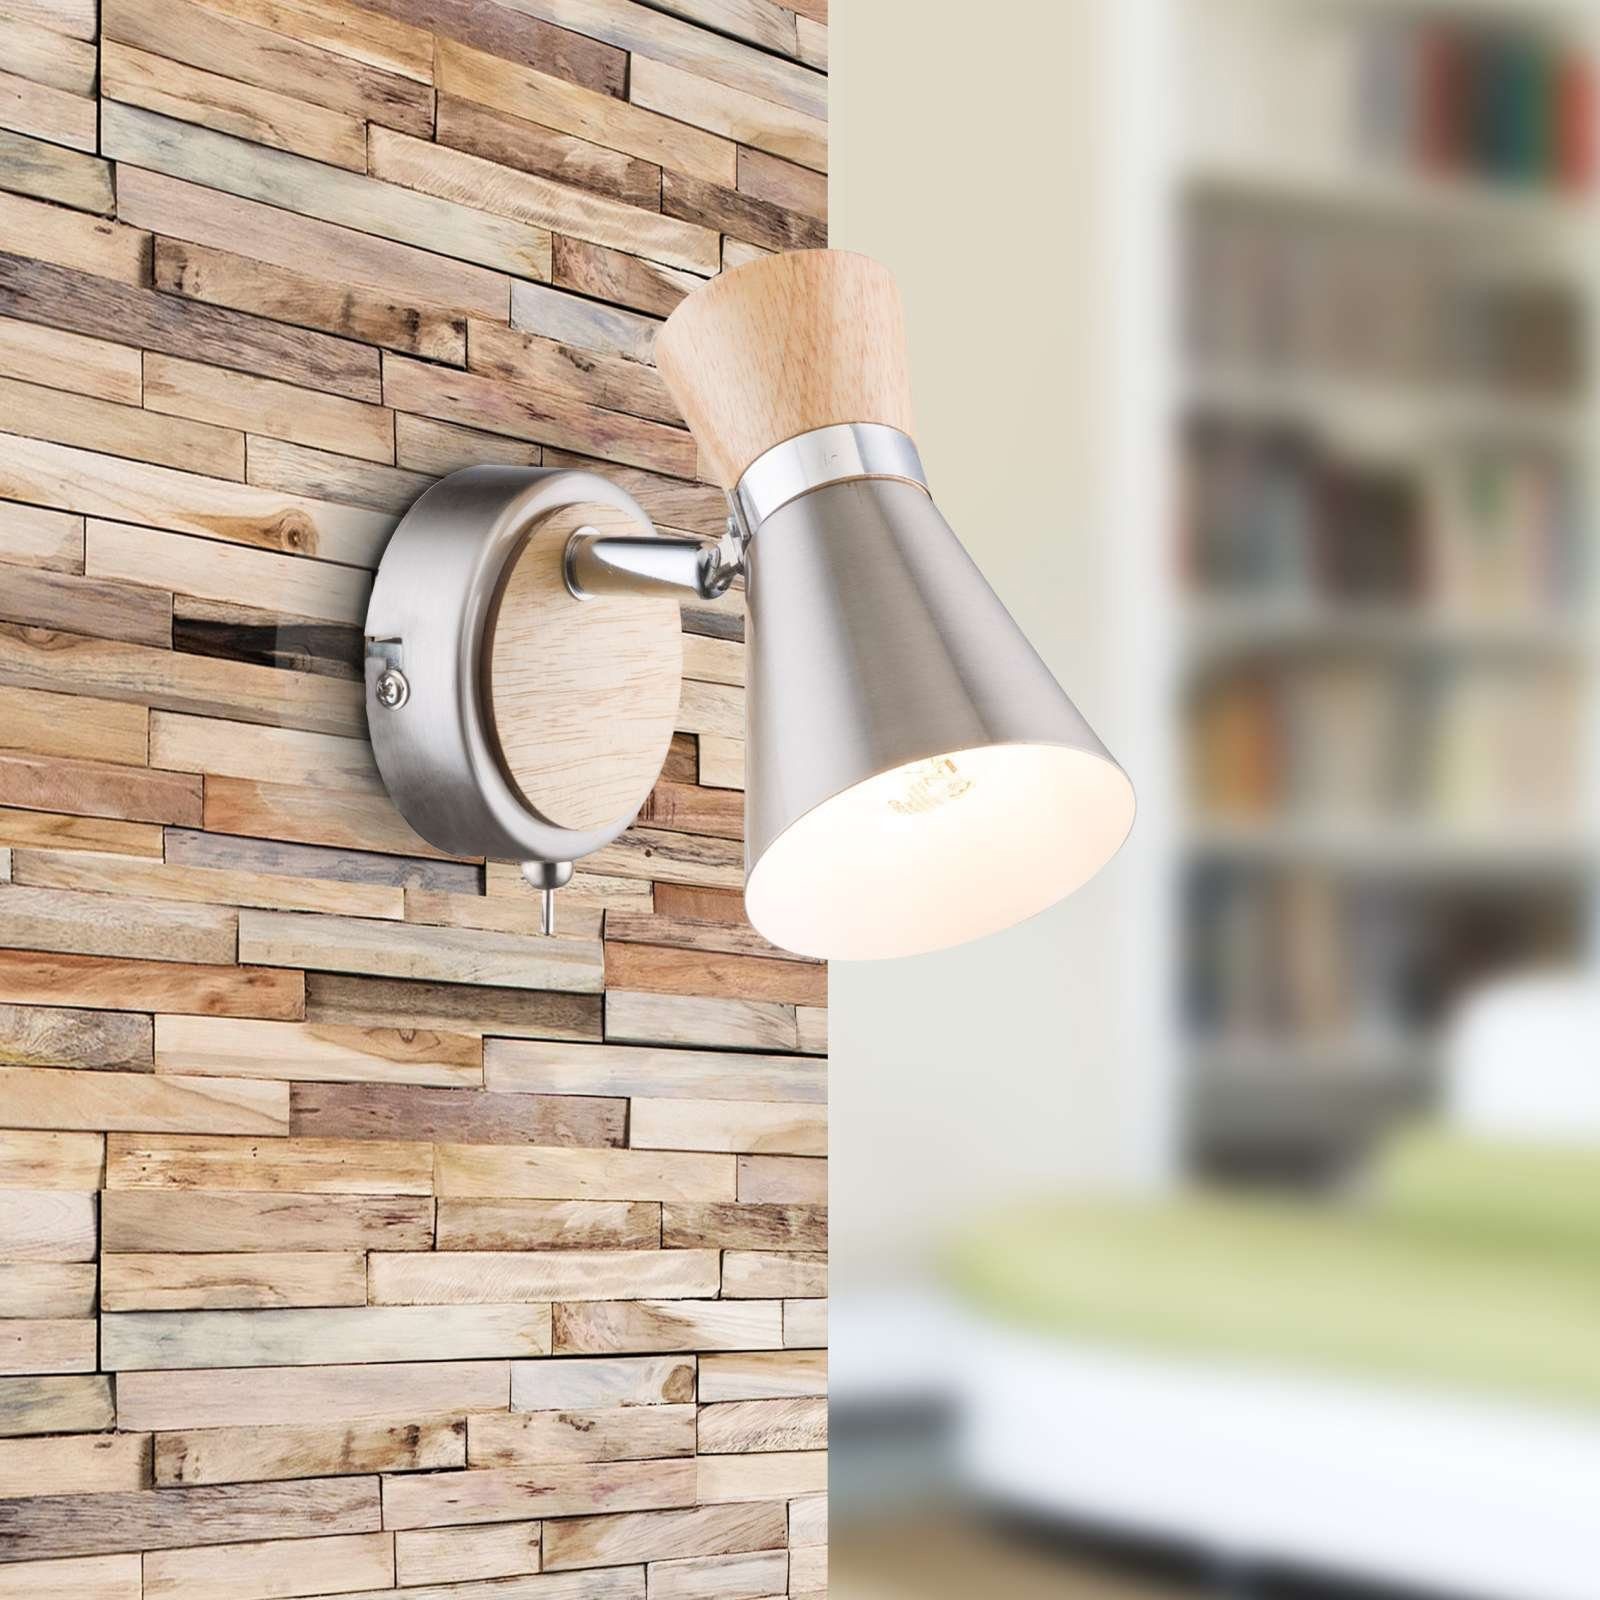 Wandlampe mit Globo GLOBO Schwenkbar Schalter Wandstrahler Wandleuchte Holz Innen